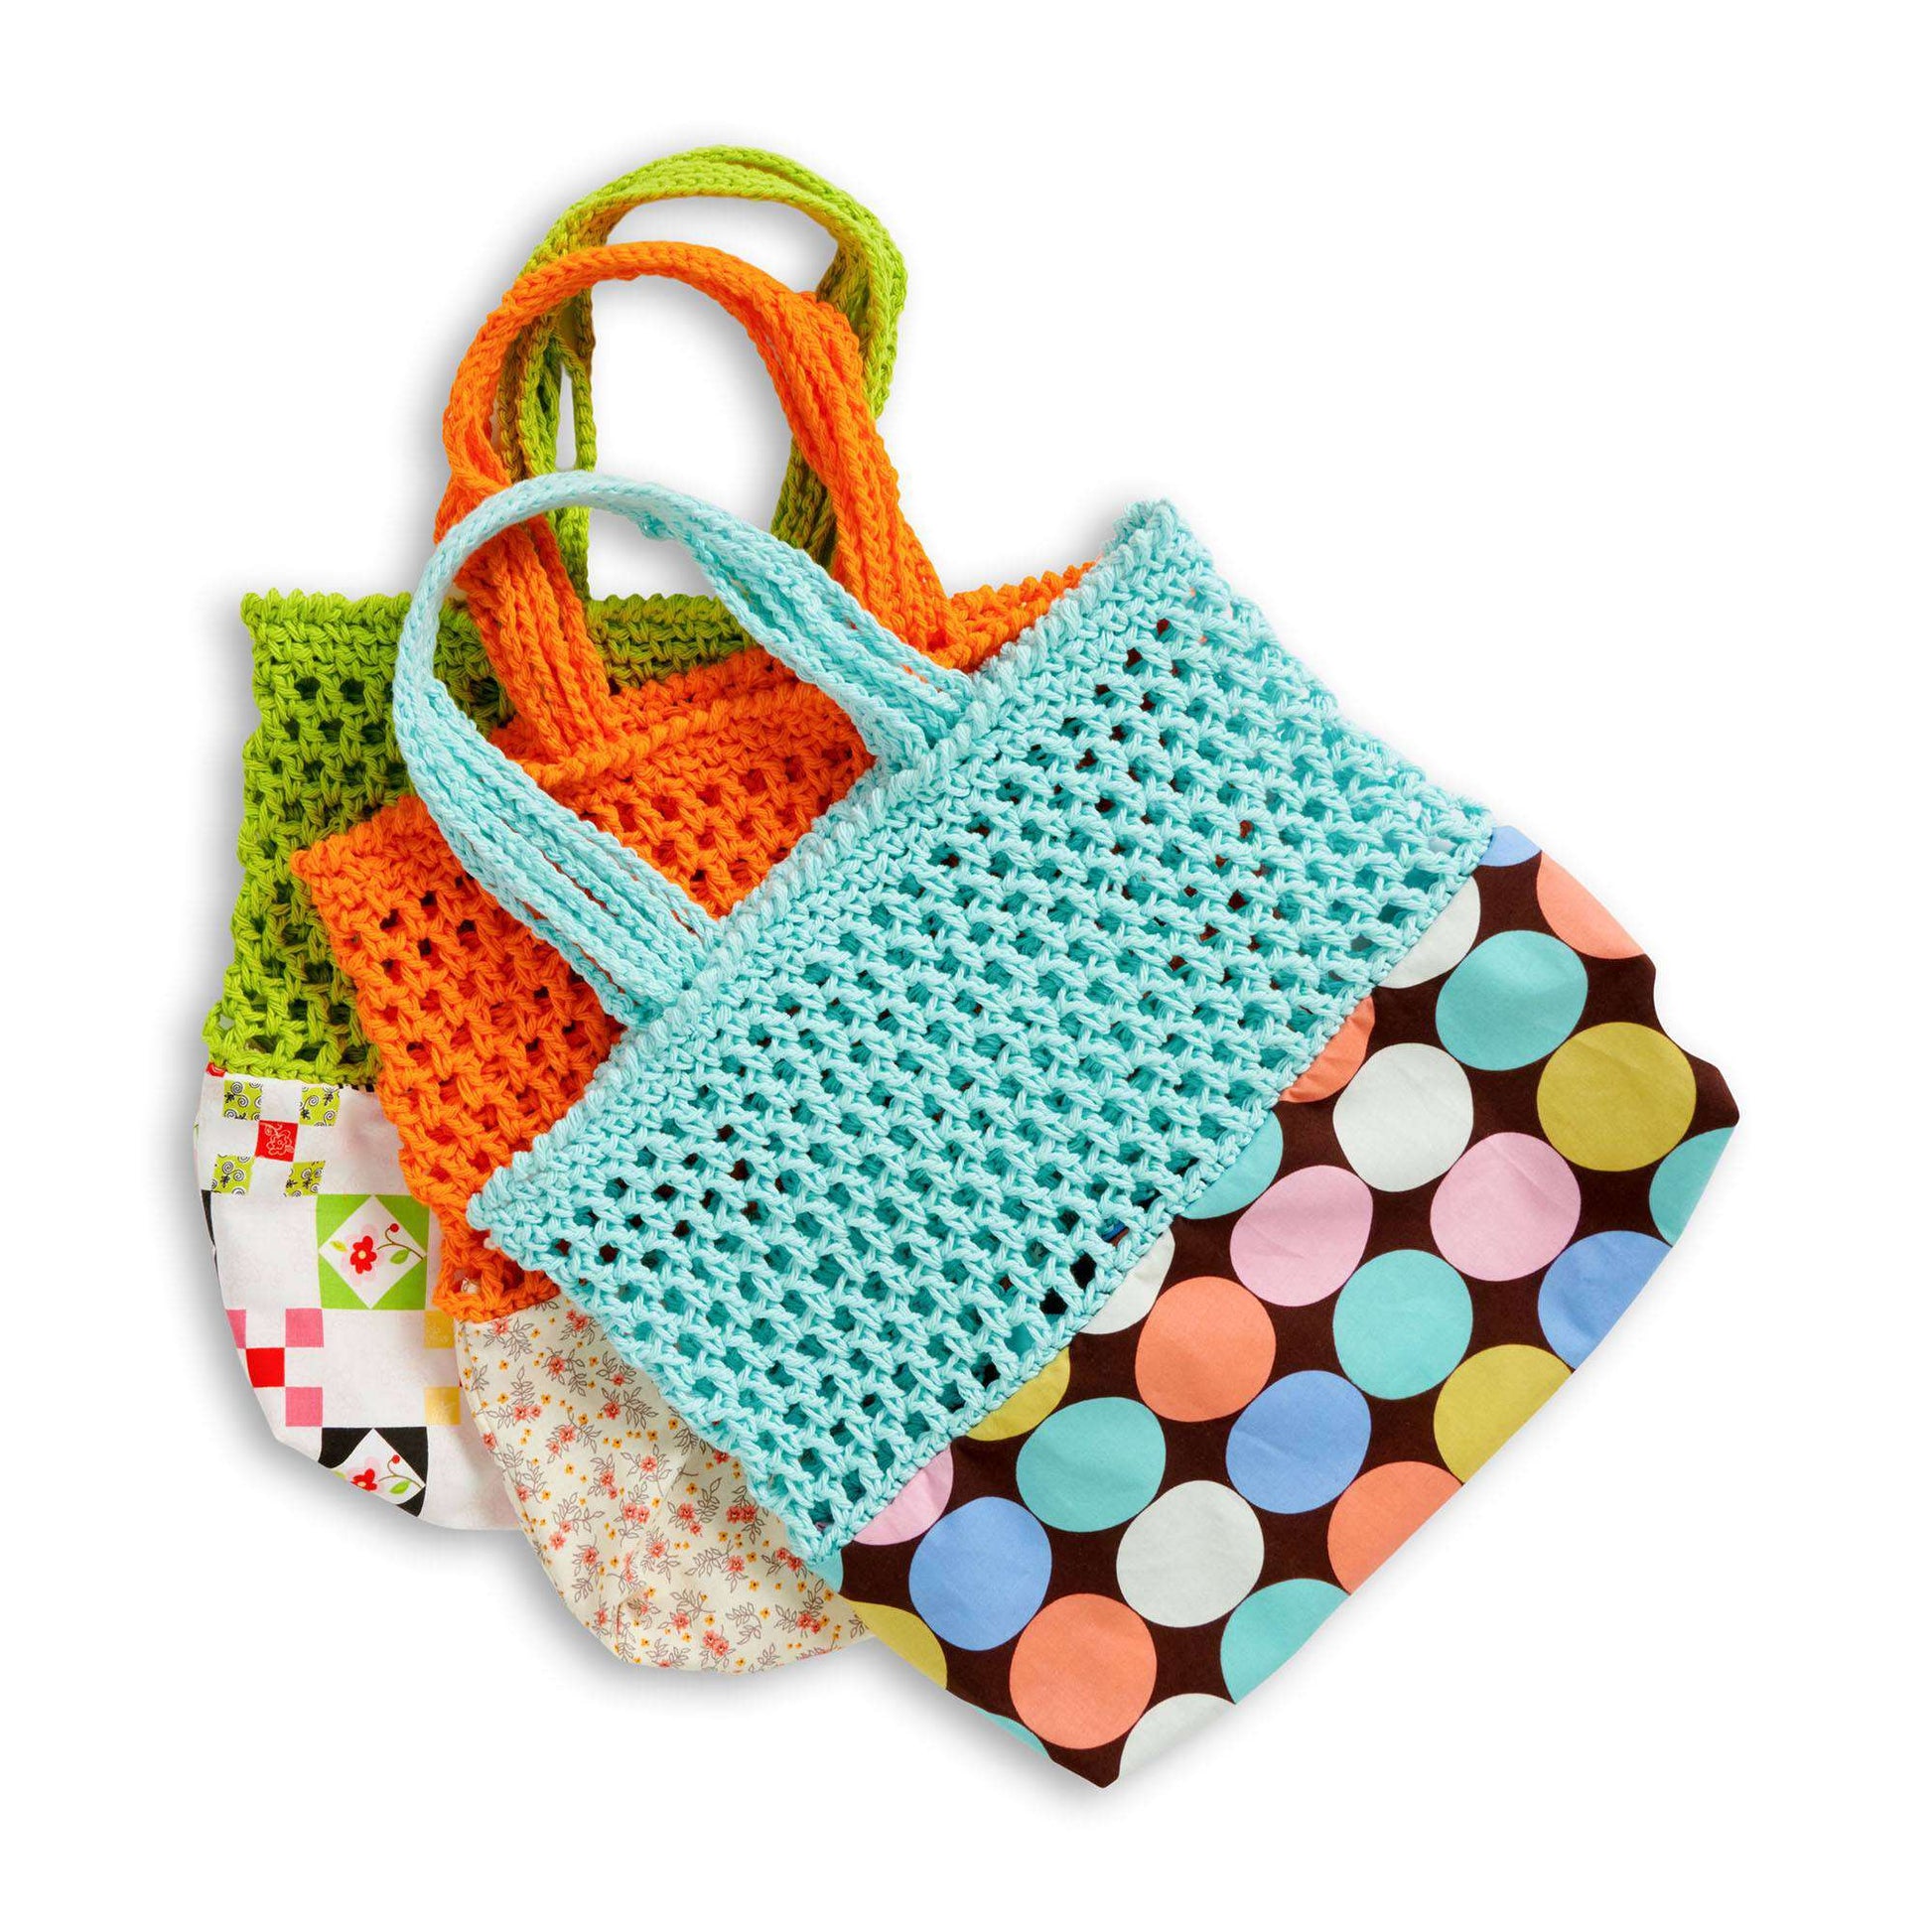 Lily Upcycle Crochet/Sew Market Tote Pattern | Yarnspirations